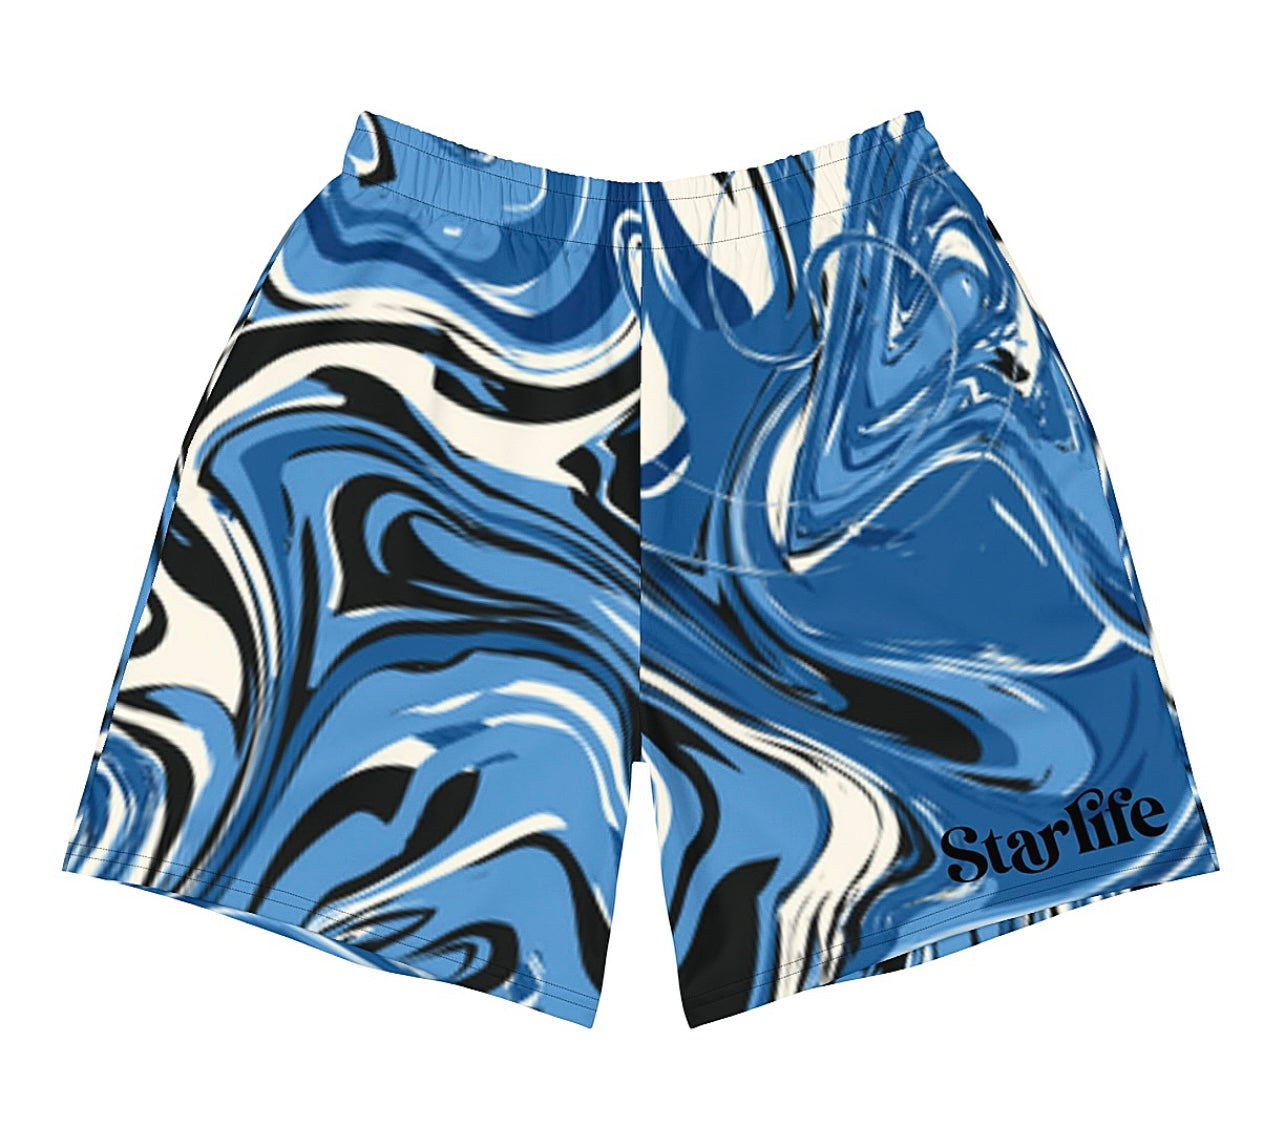 Ocean Blue Marble Shorts